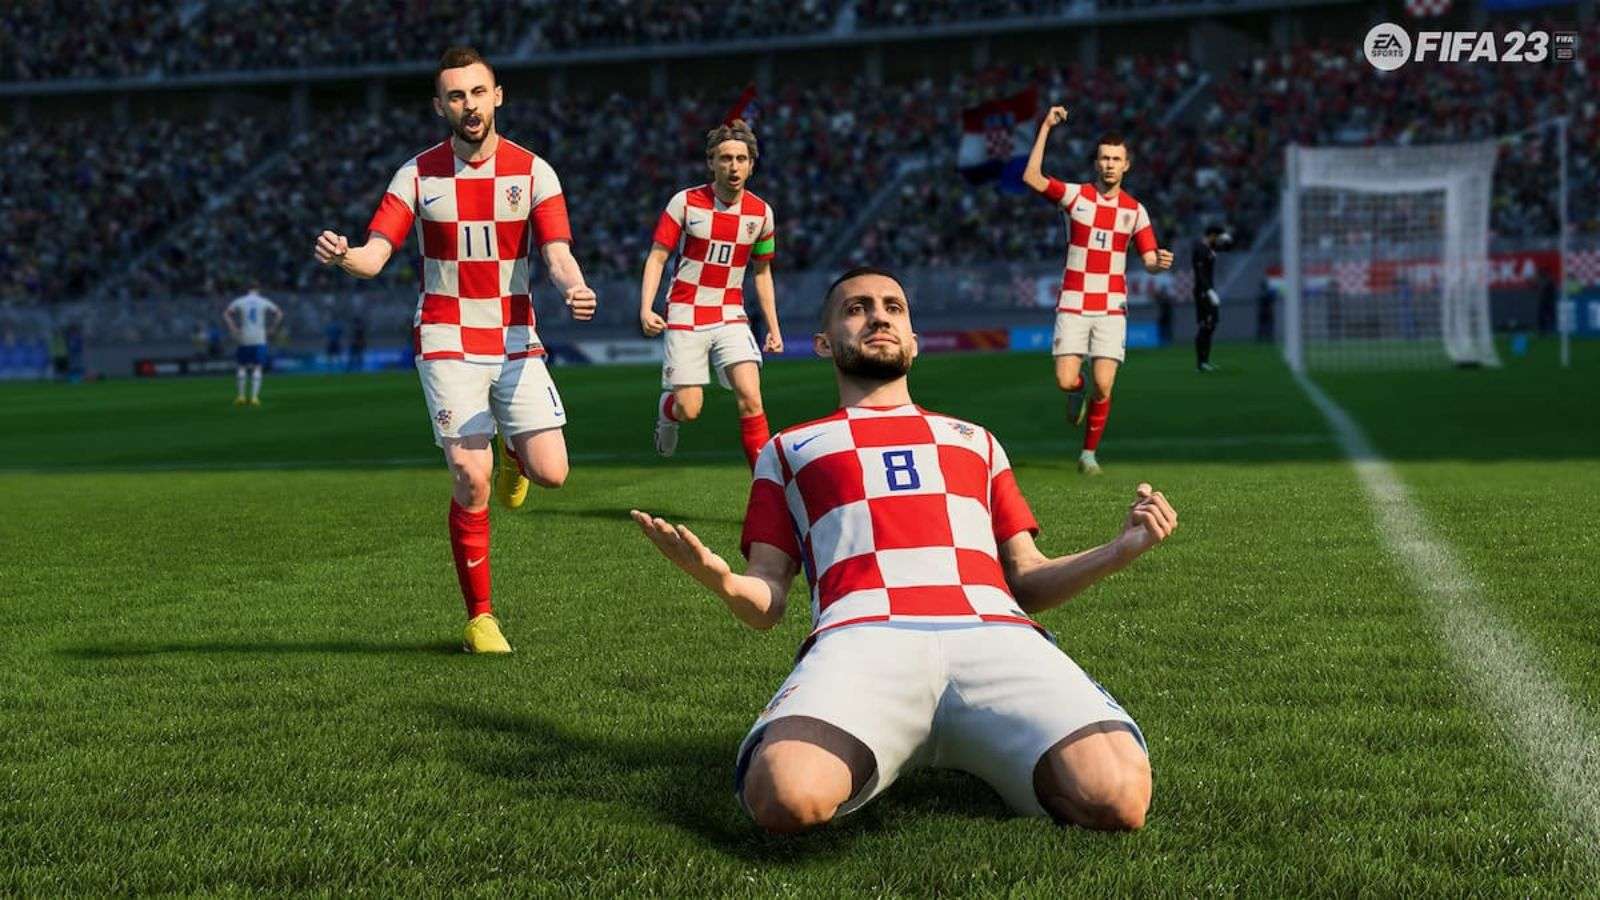 FIFA 23 Croatia players celebrating